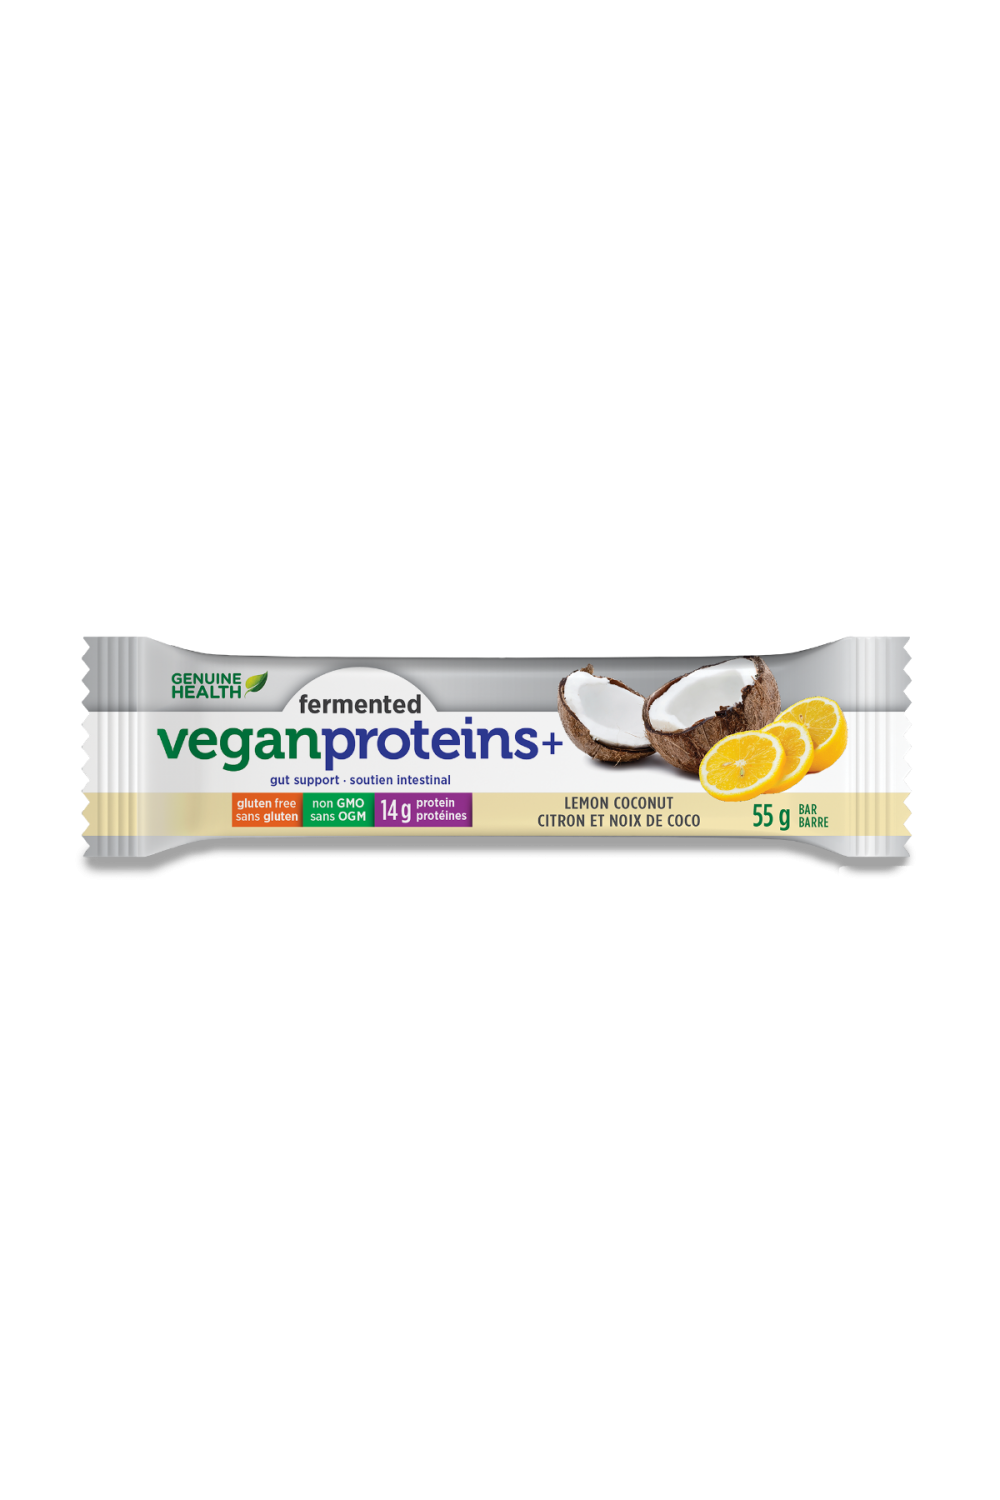 Genuine Health Fermented Vegan Proteins+ Bar - Lemon Coconut Flavour 55g (Box of 12)